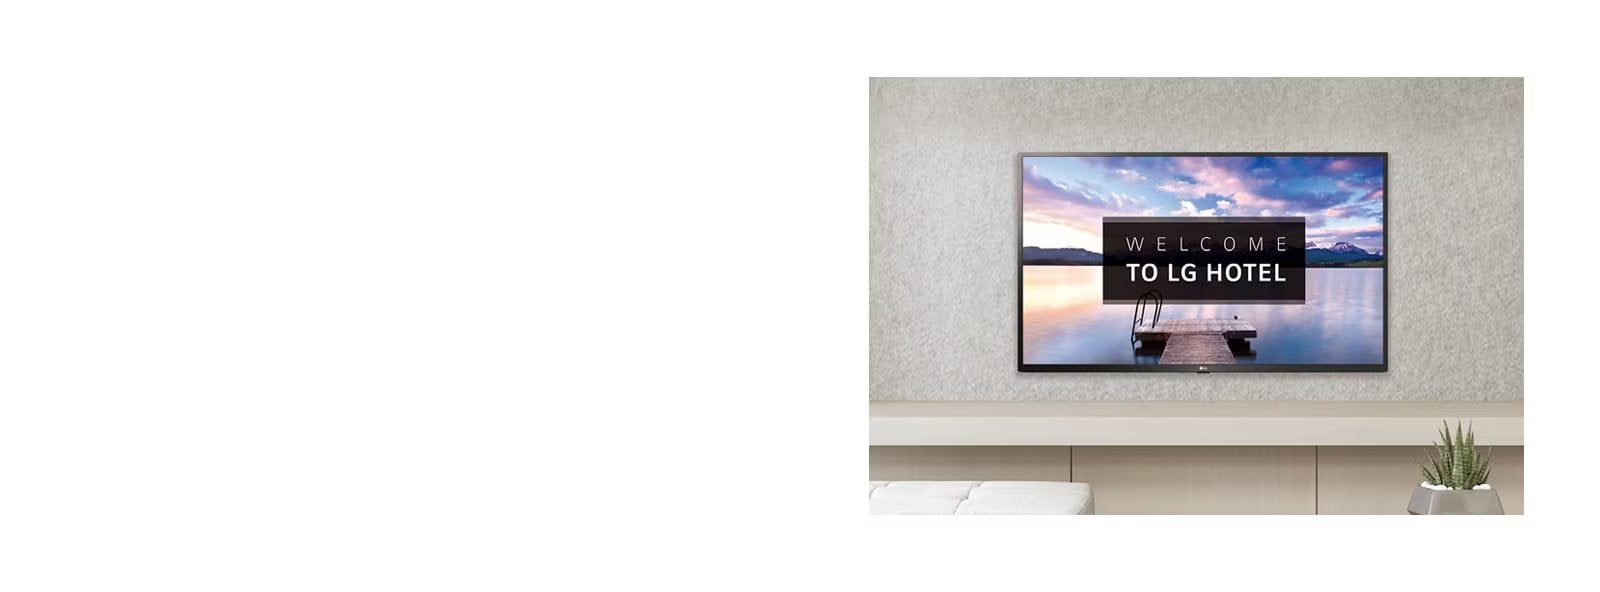 LG 43US662H 43" Pro:Centric Smart Hotel TV